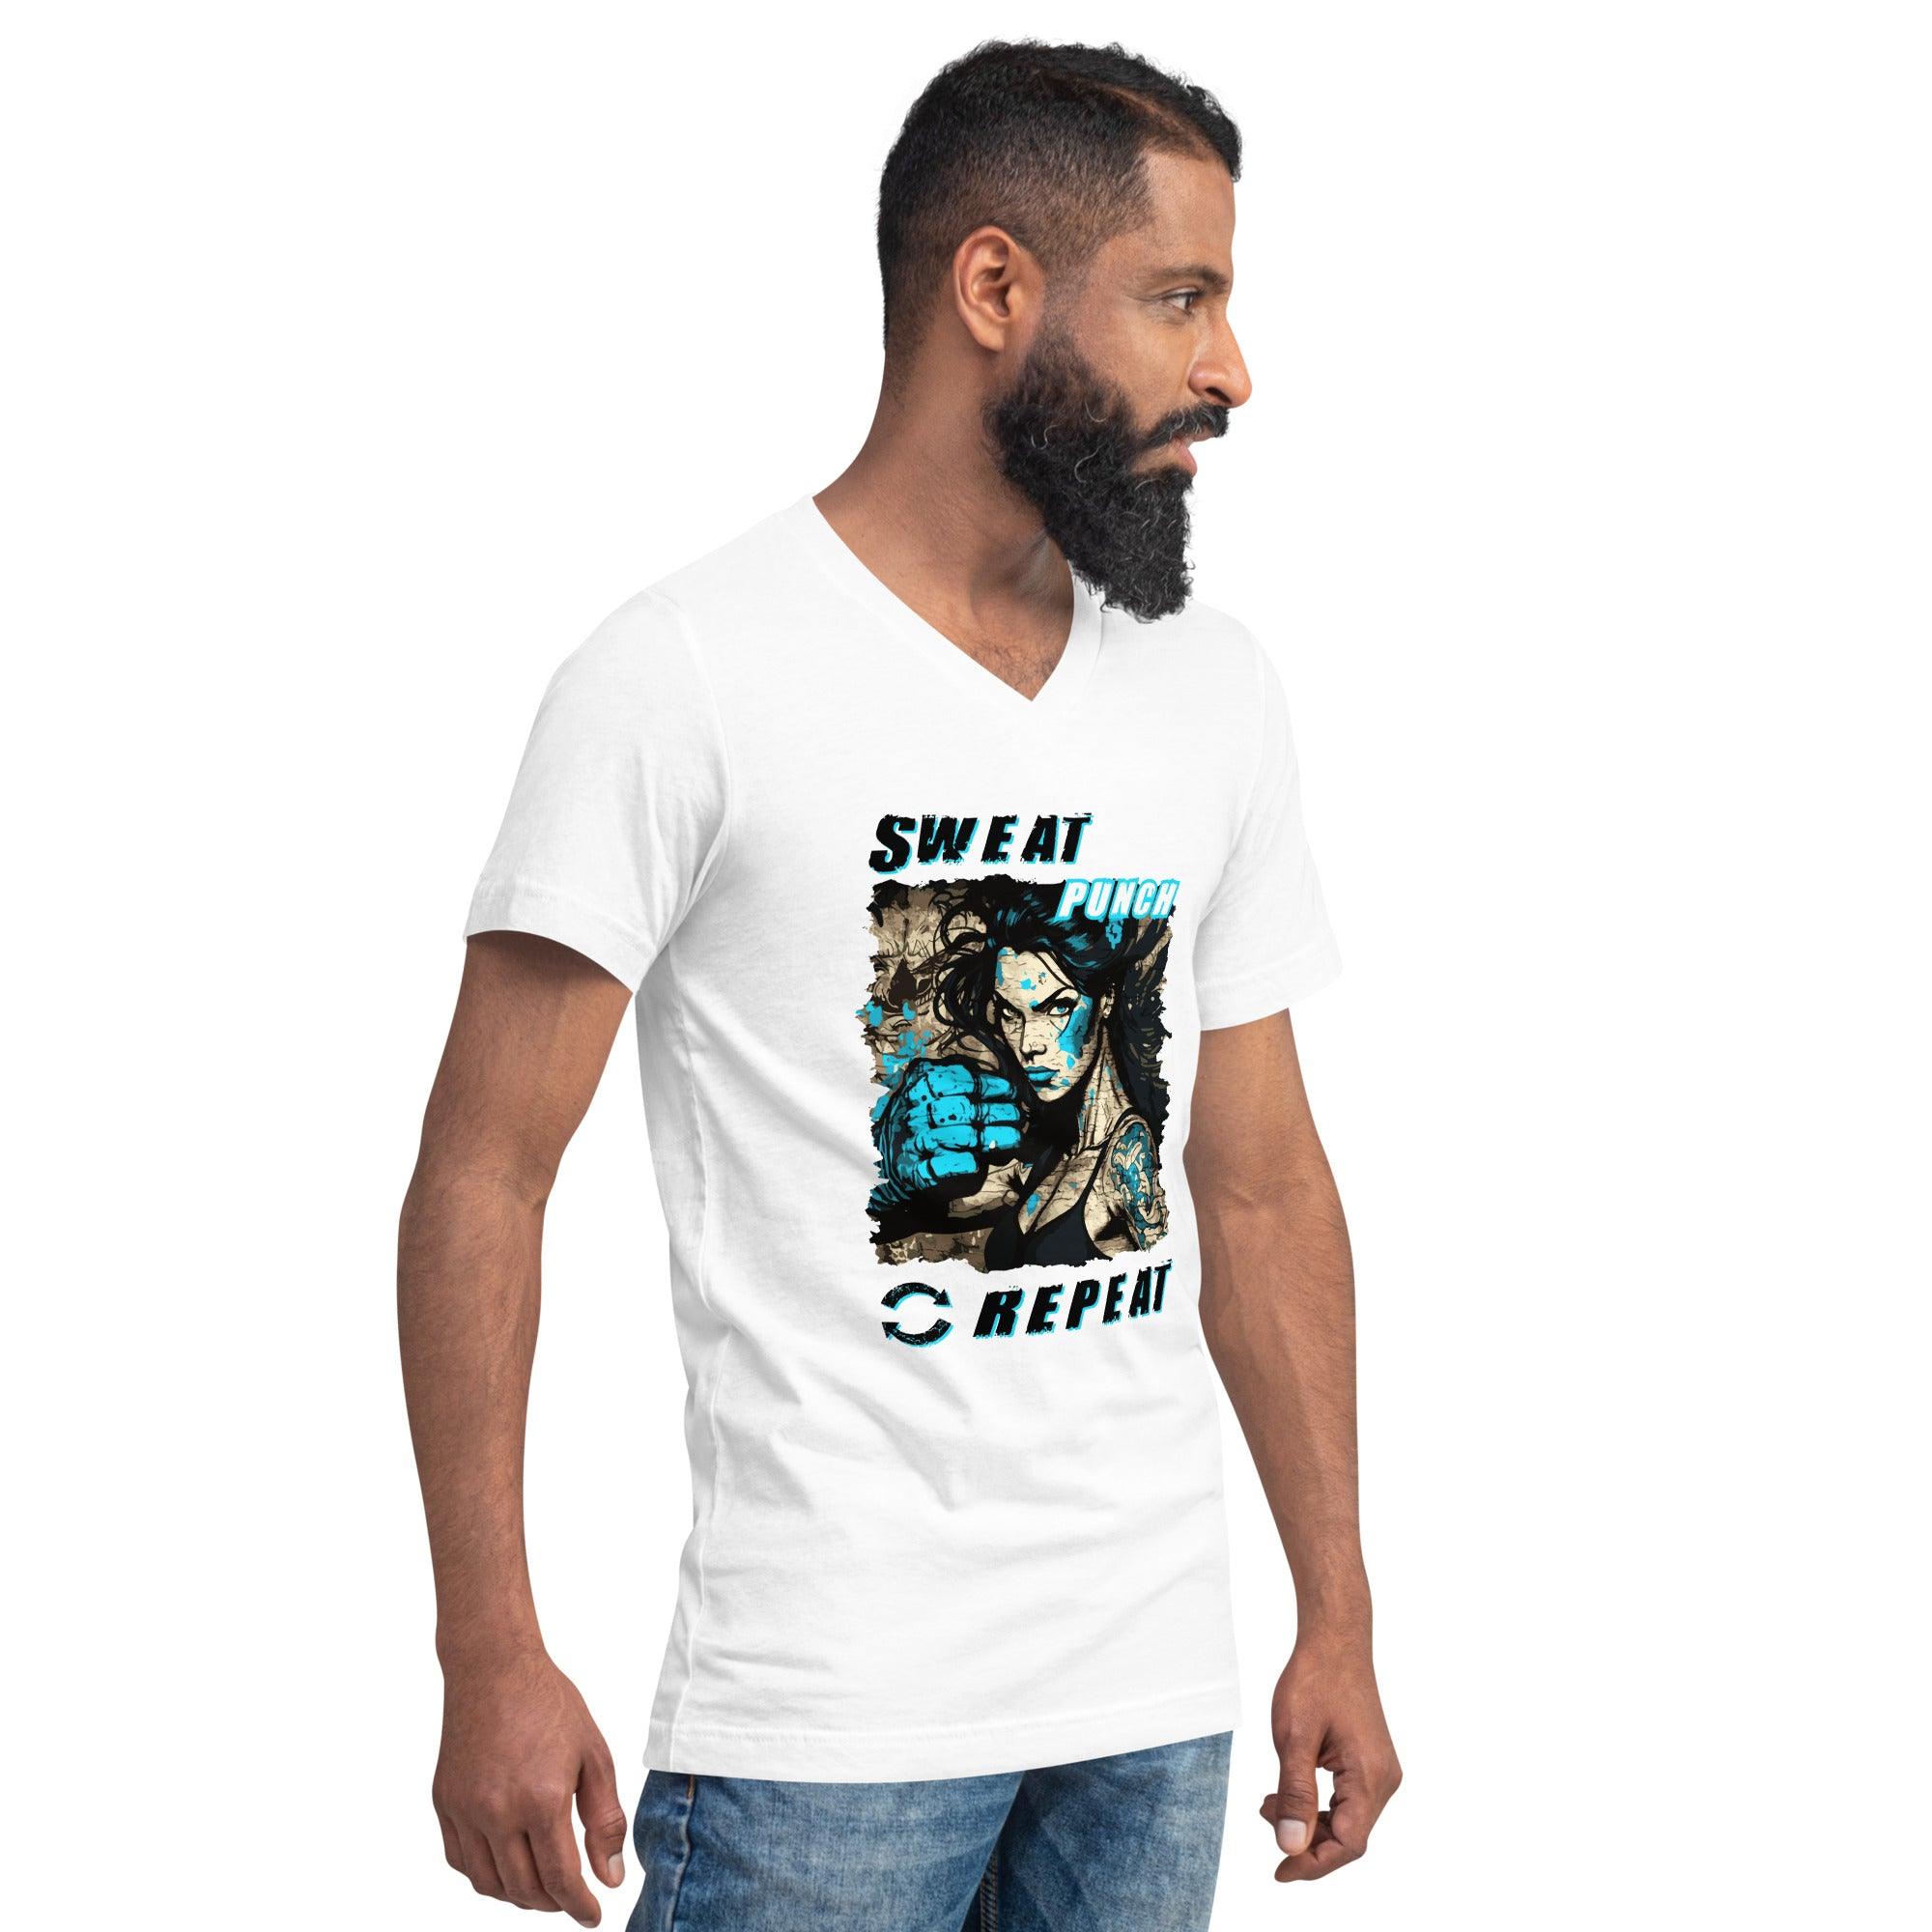 Sweat Punch Repeat Unisex Short Sleeve V-Neck T-Shirt - Beyond T-shirts